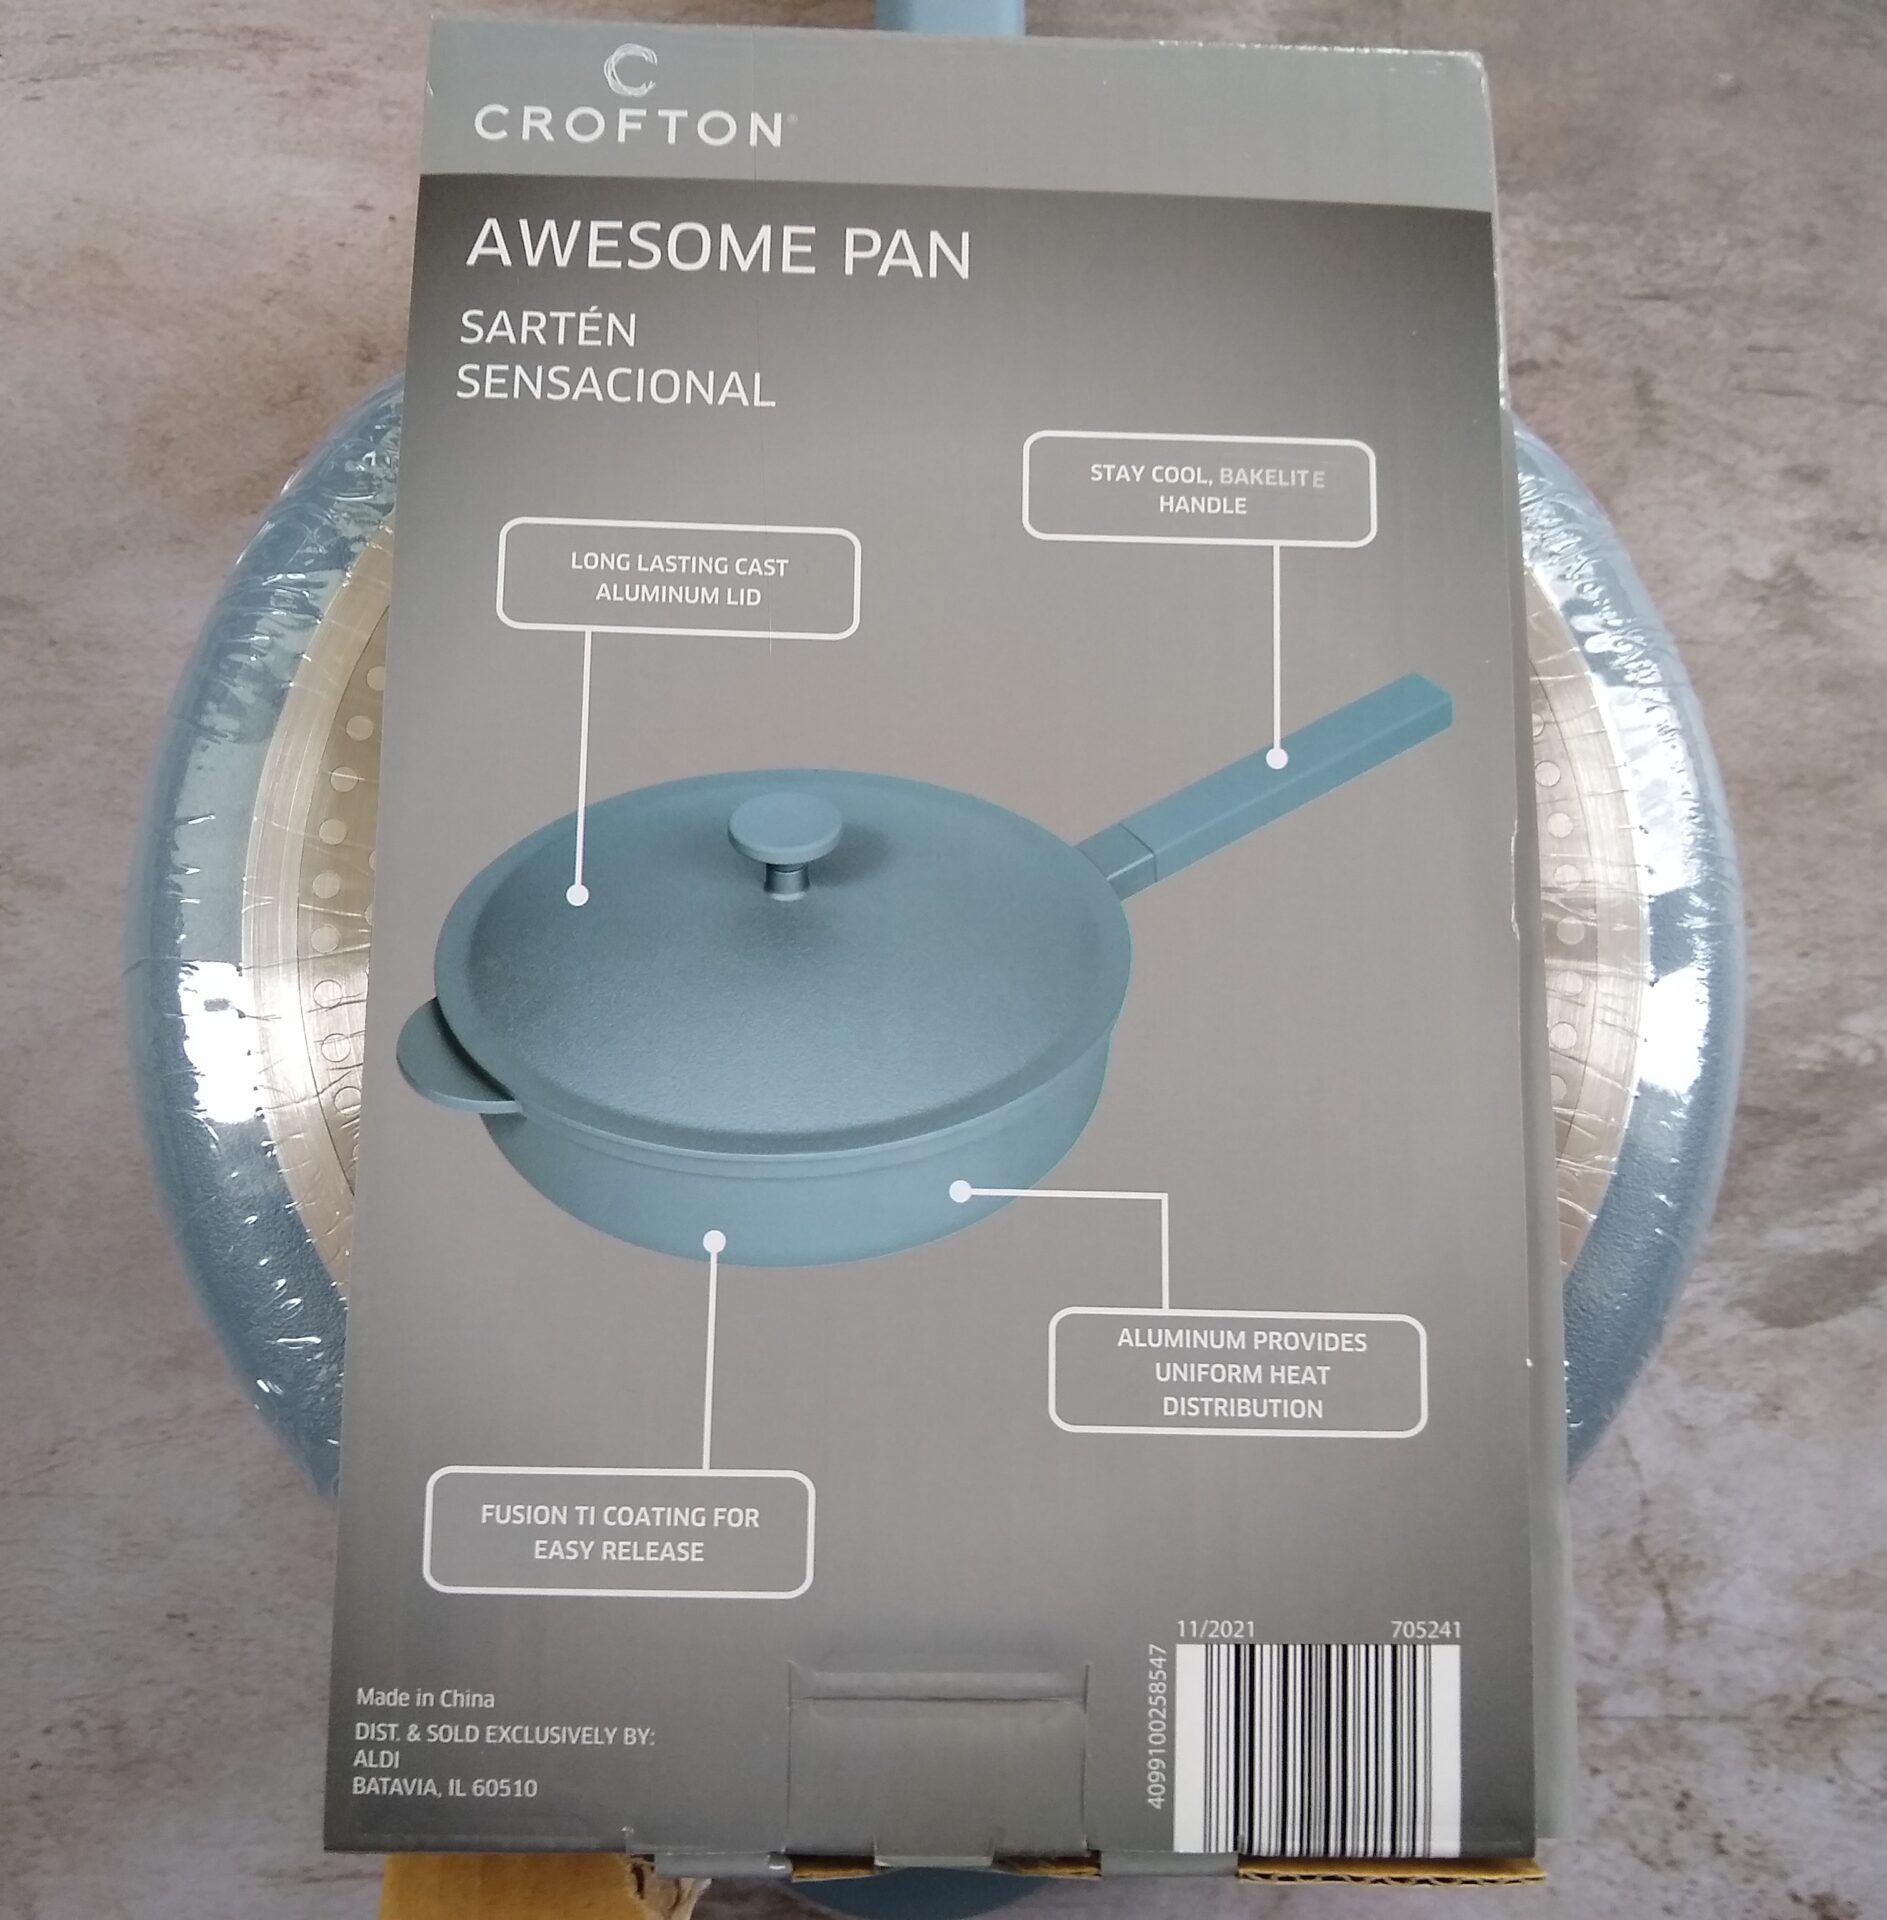 Crofton Awesome Pan